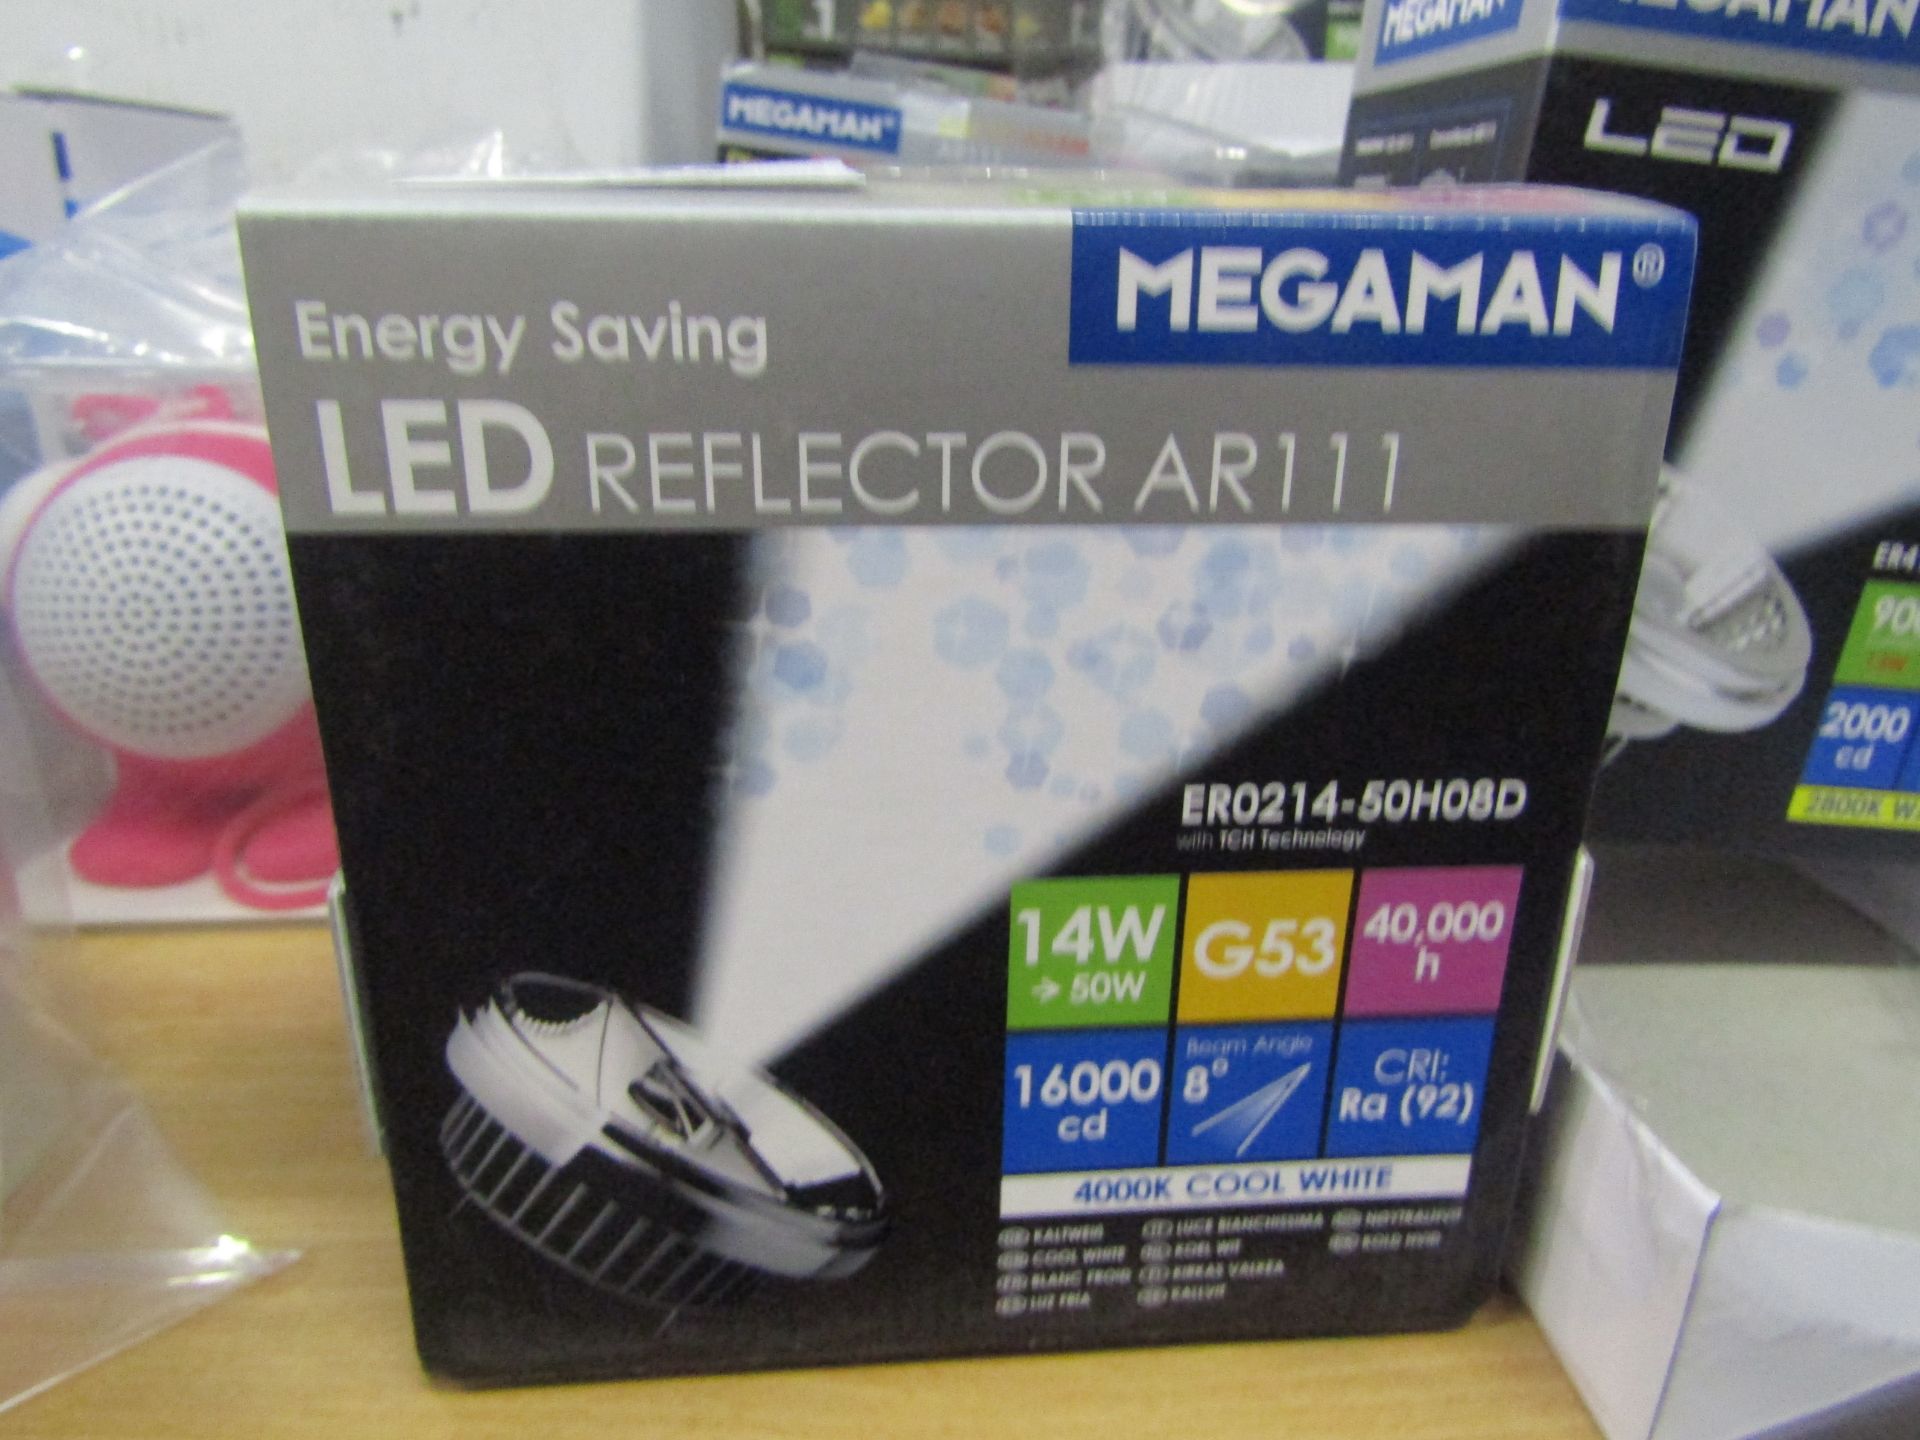 Megaman LED reflector AR111 light bulb, new and boxed. G53 / 40,000Hrs / 630 Lumens